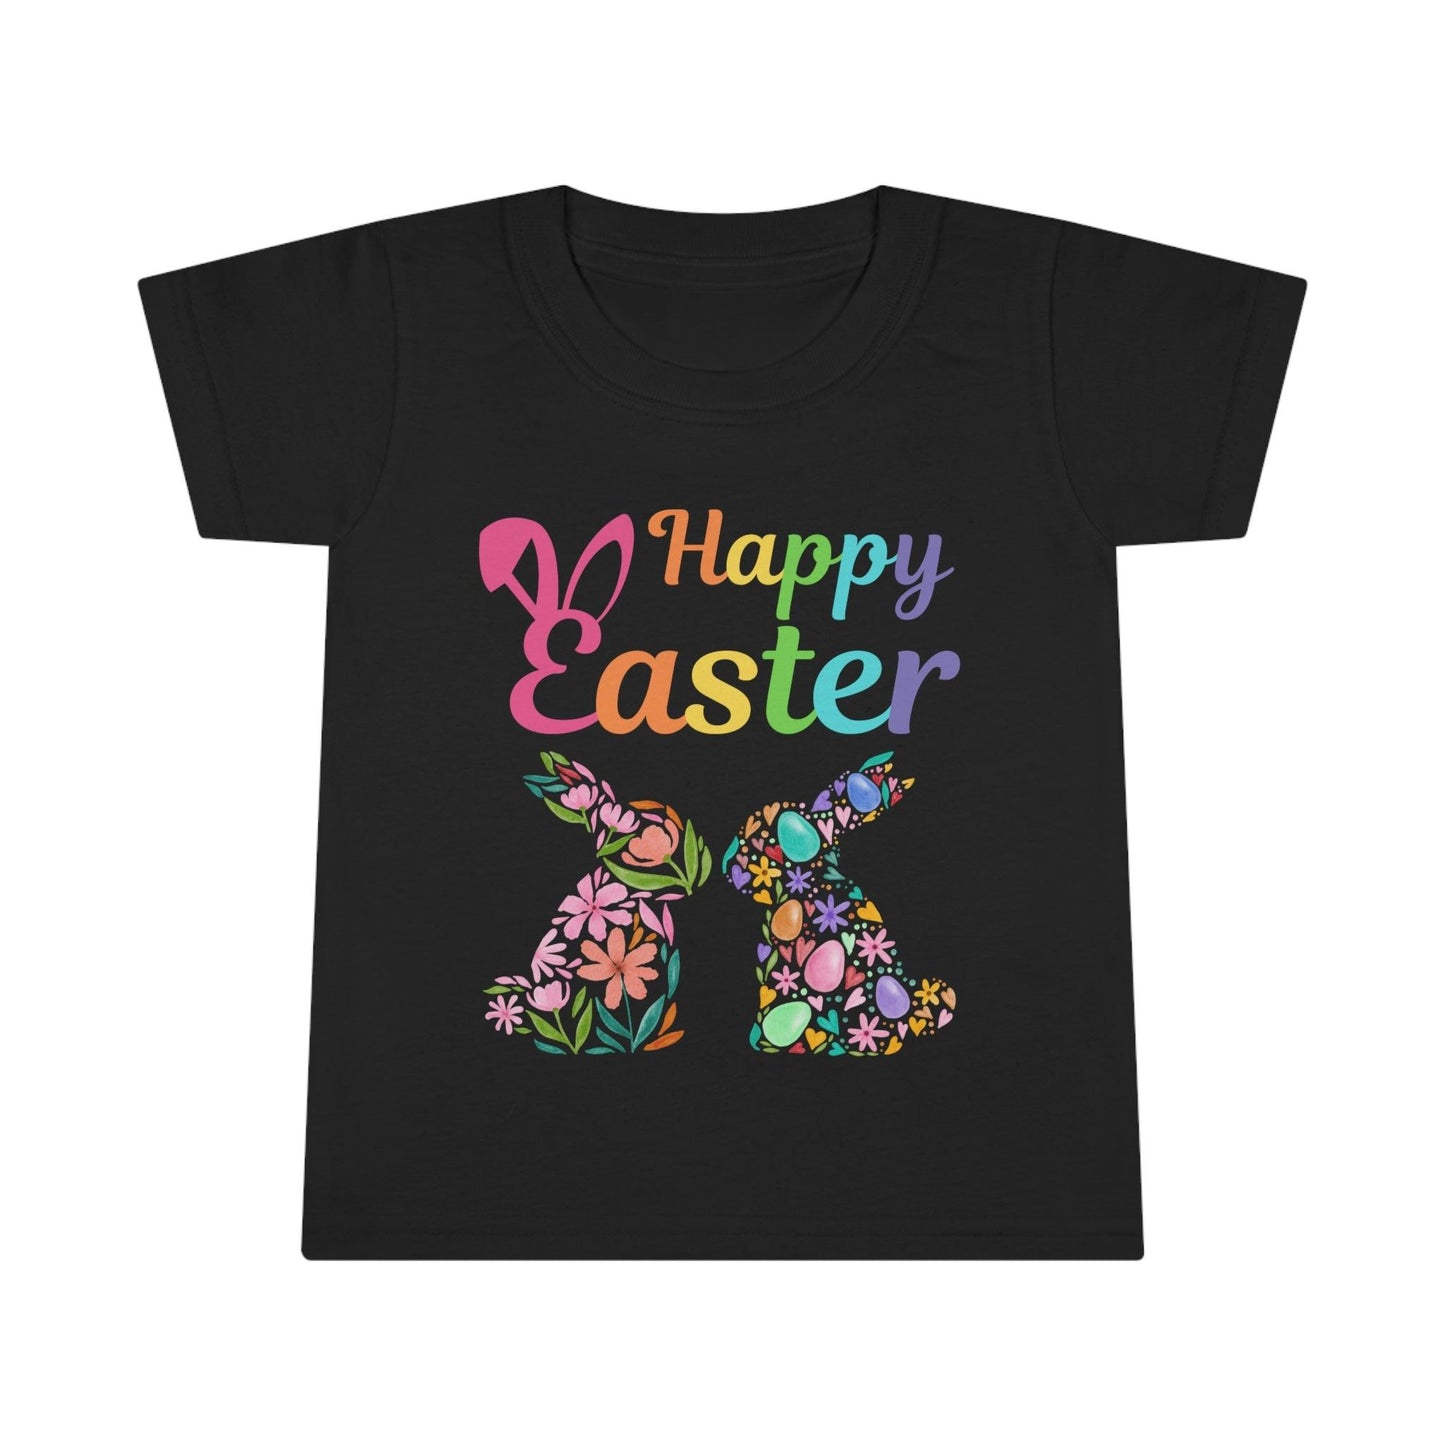 Baby girl easter shirt Baby boy easter shirt toddler easter Toddler T-shirt baby easter outfit first communion gift happy Easter Shirt gift